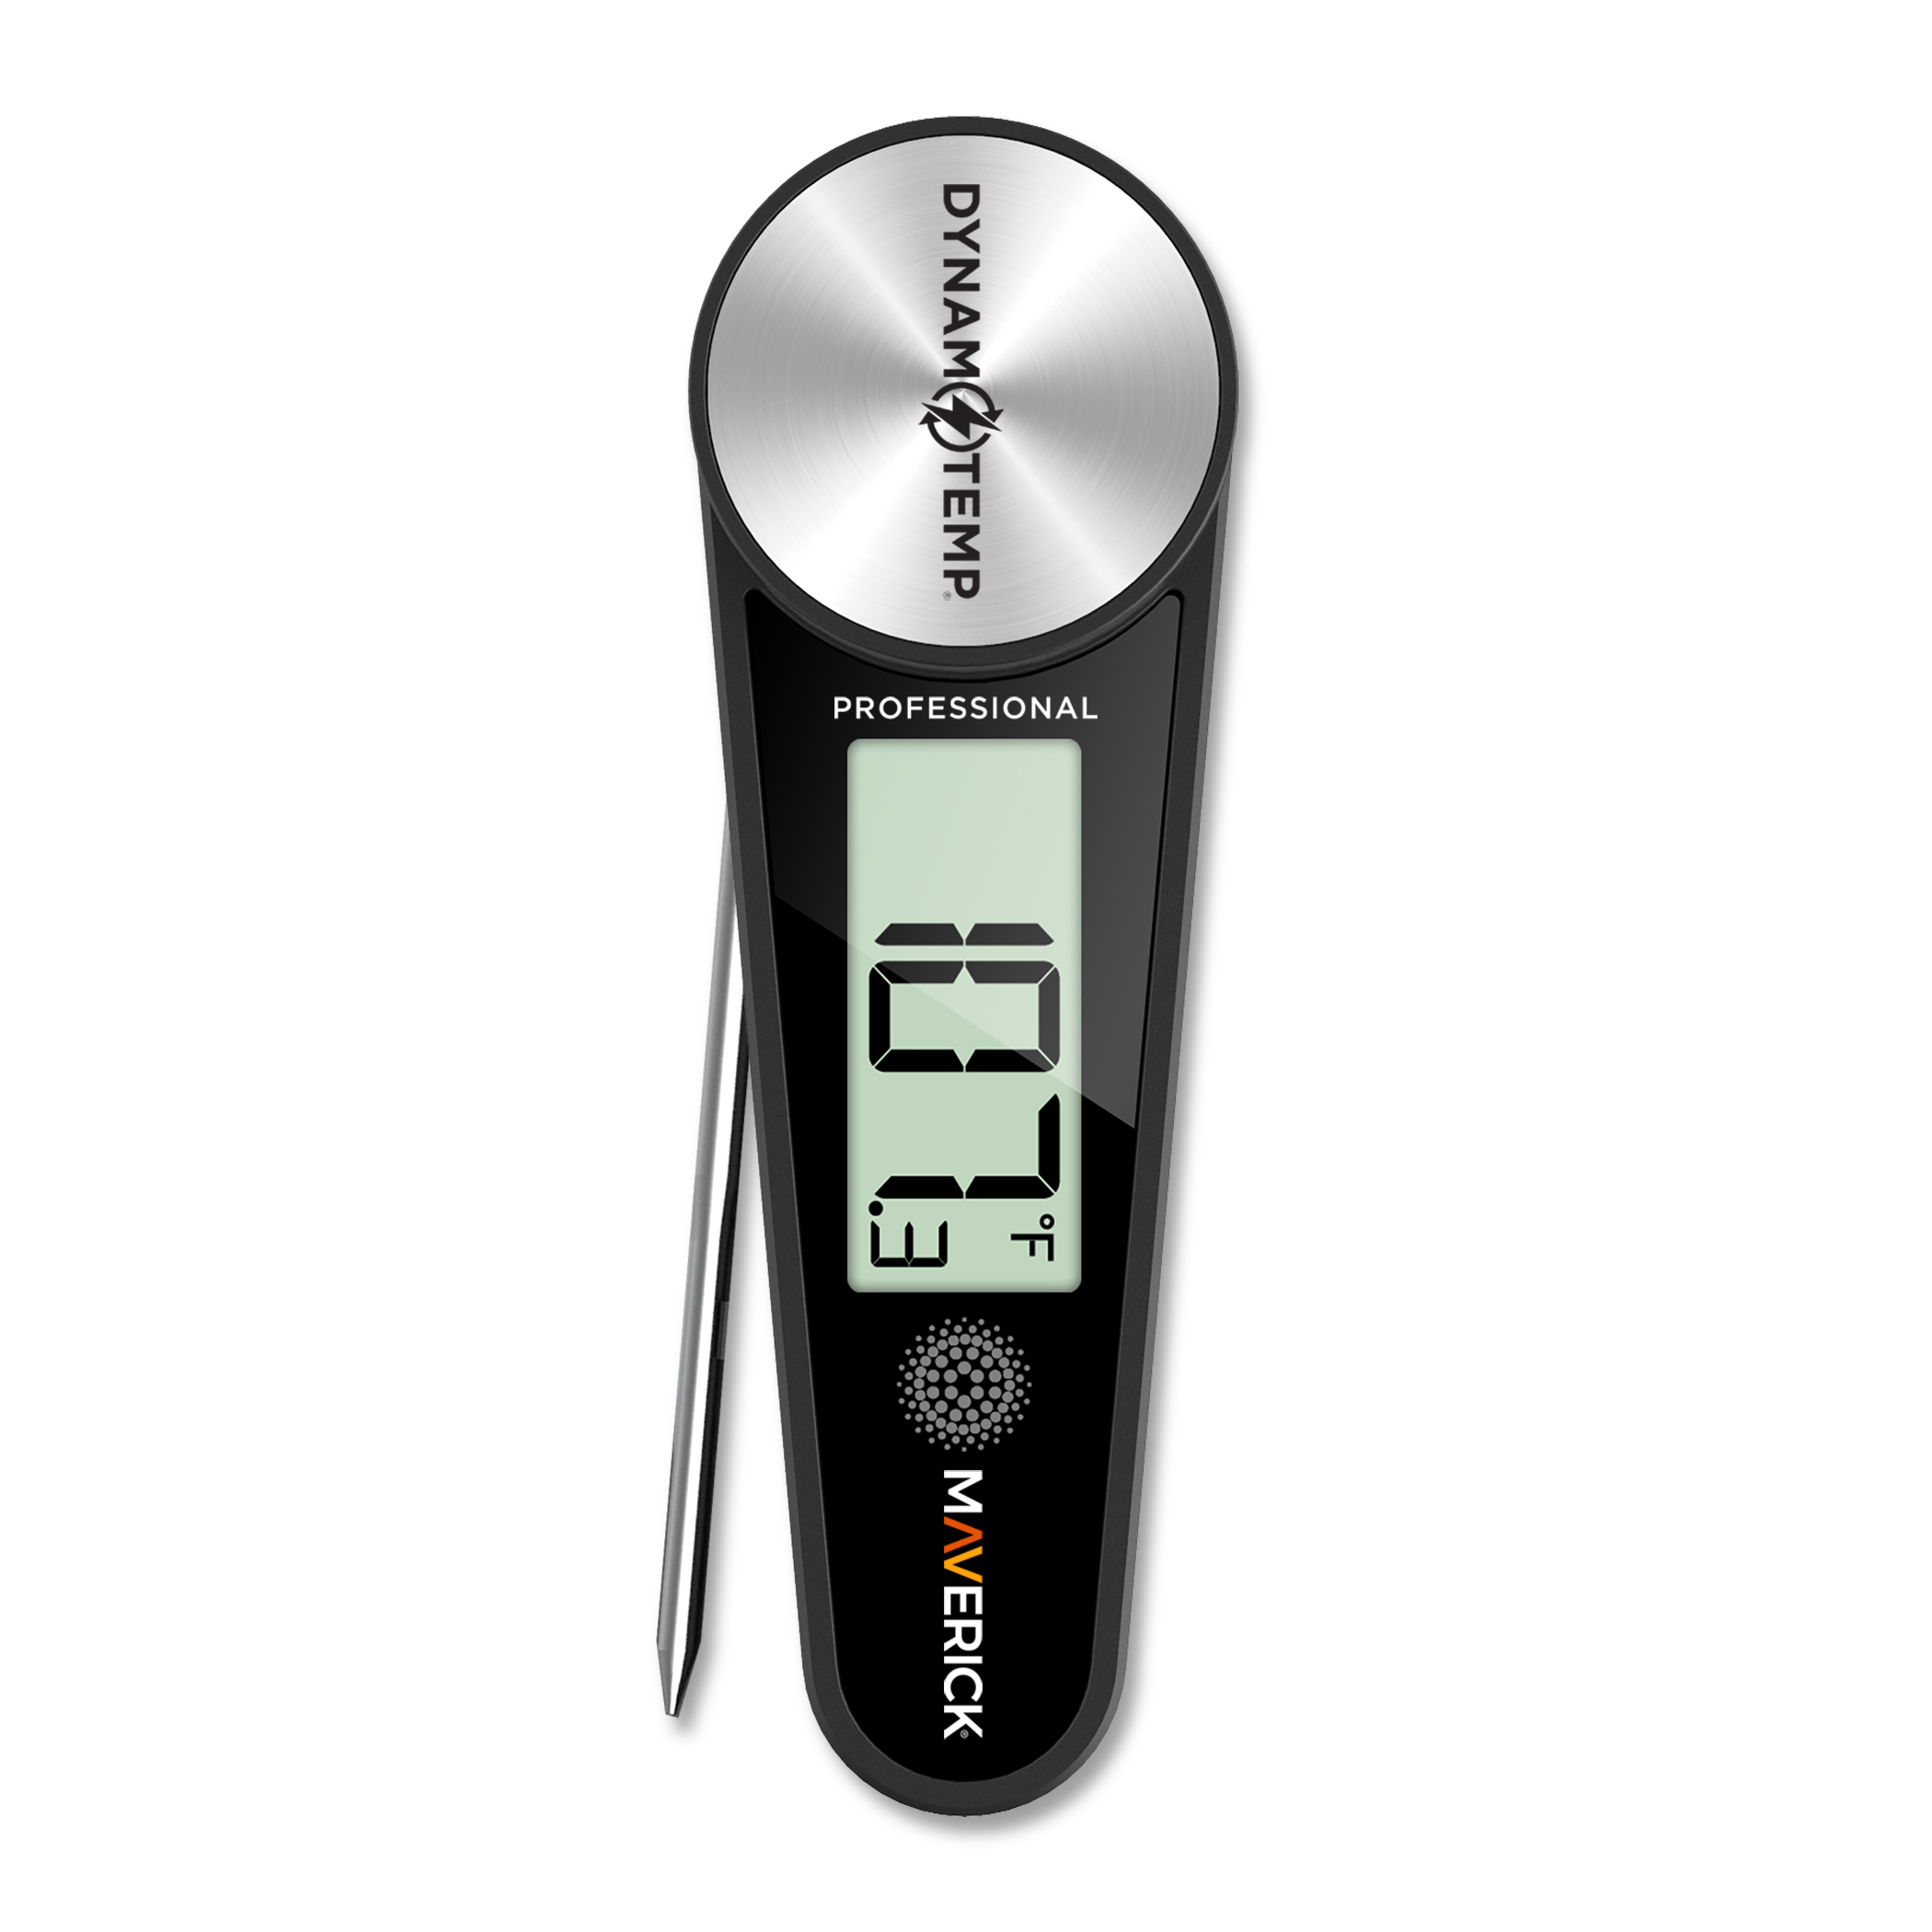 Food Digital Thermometer